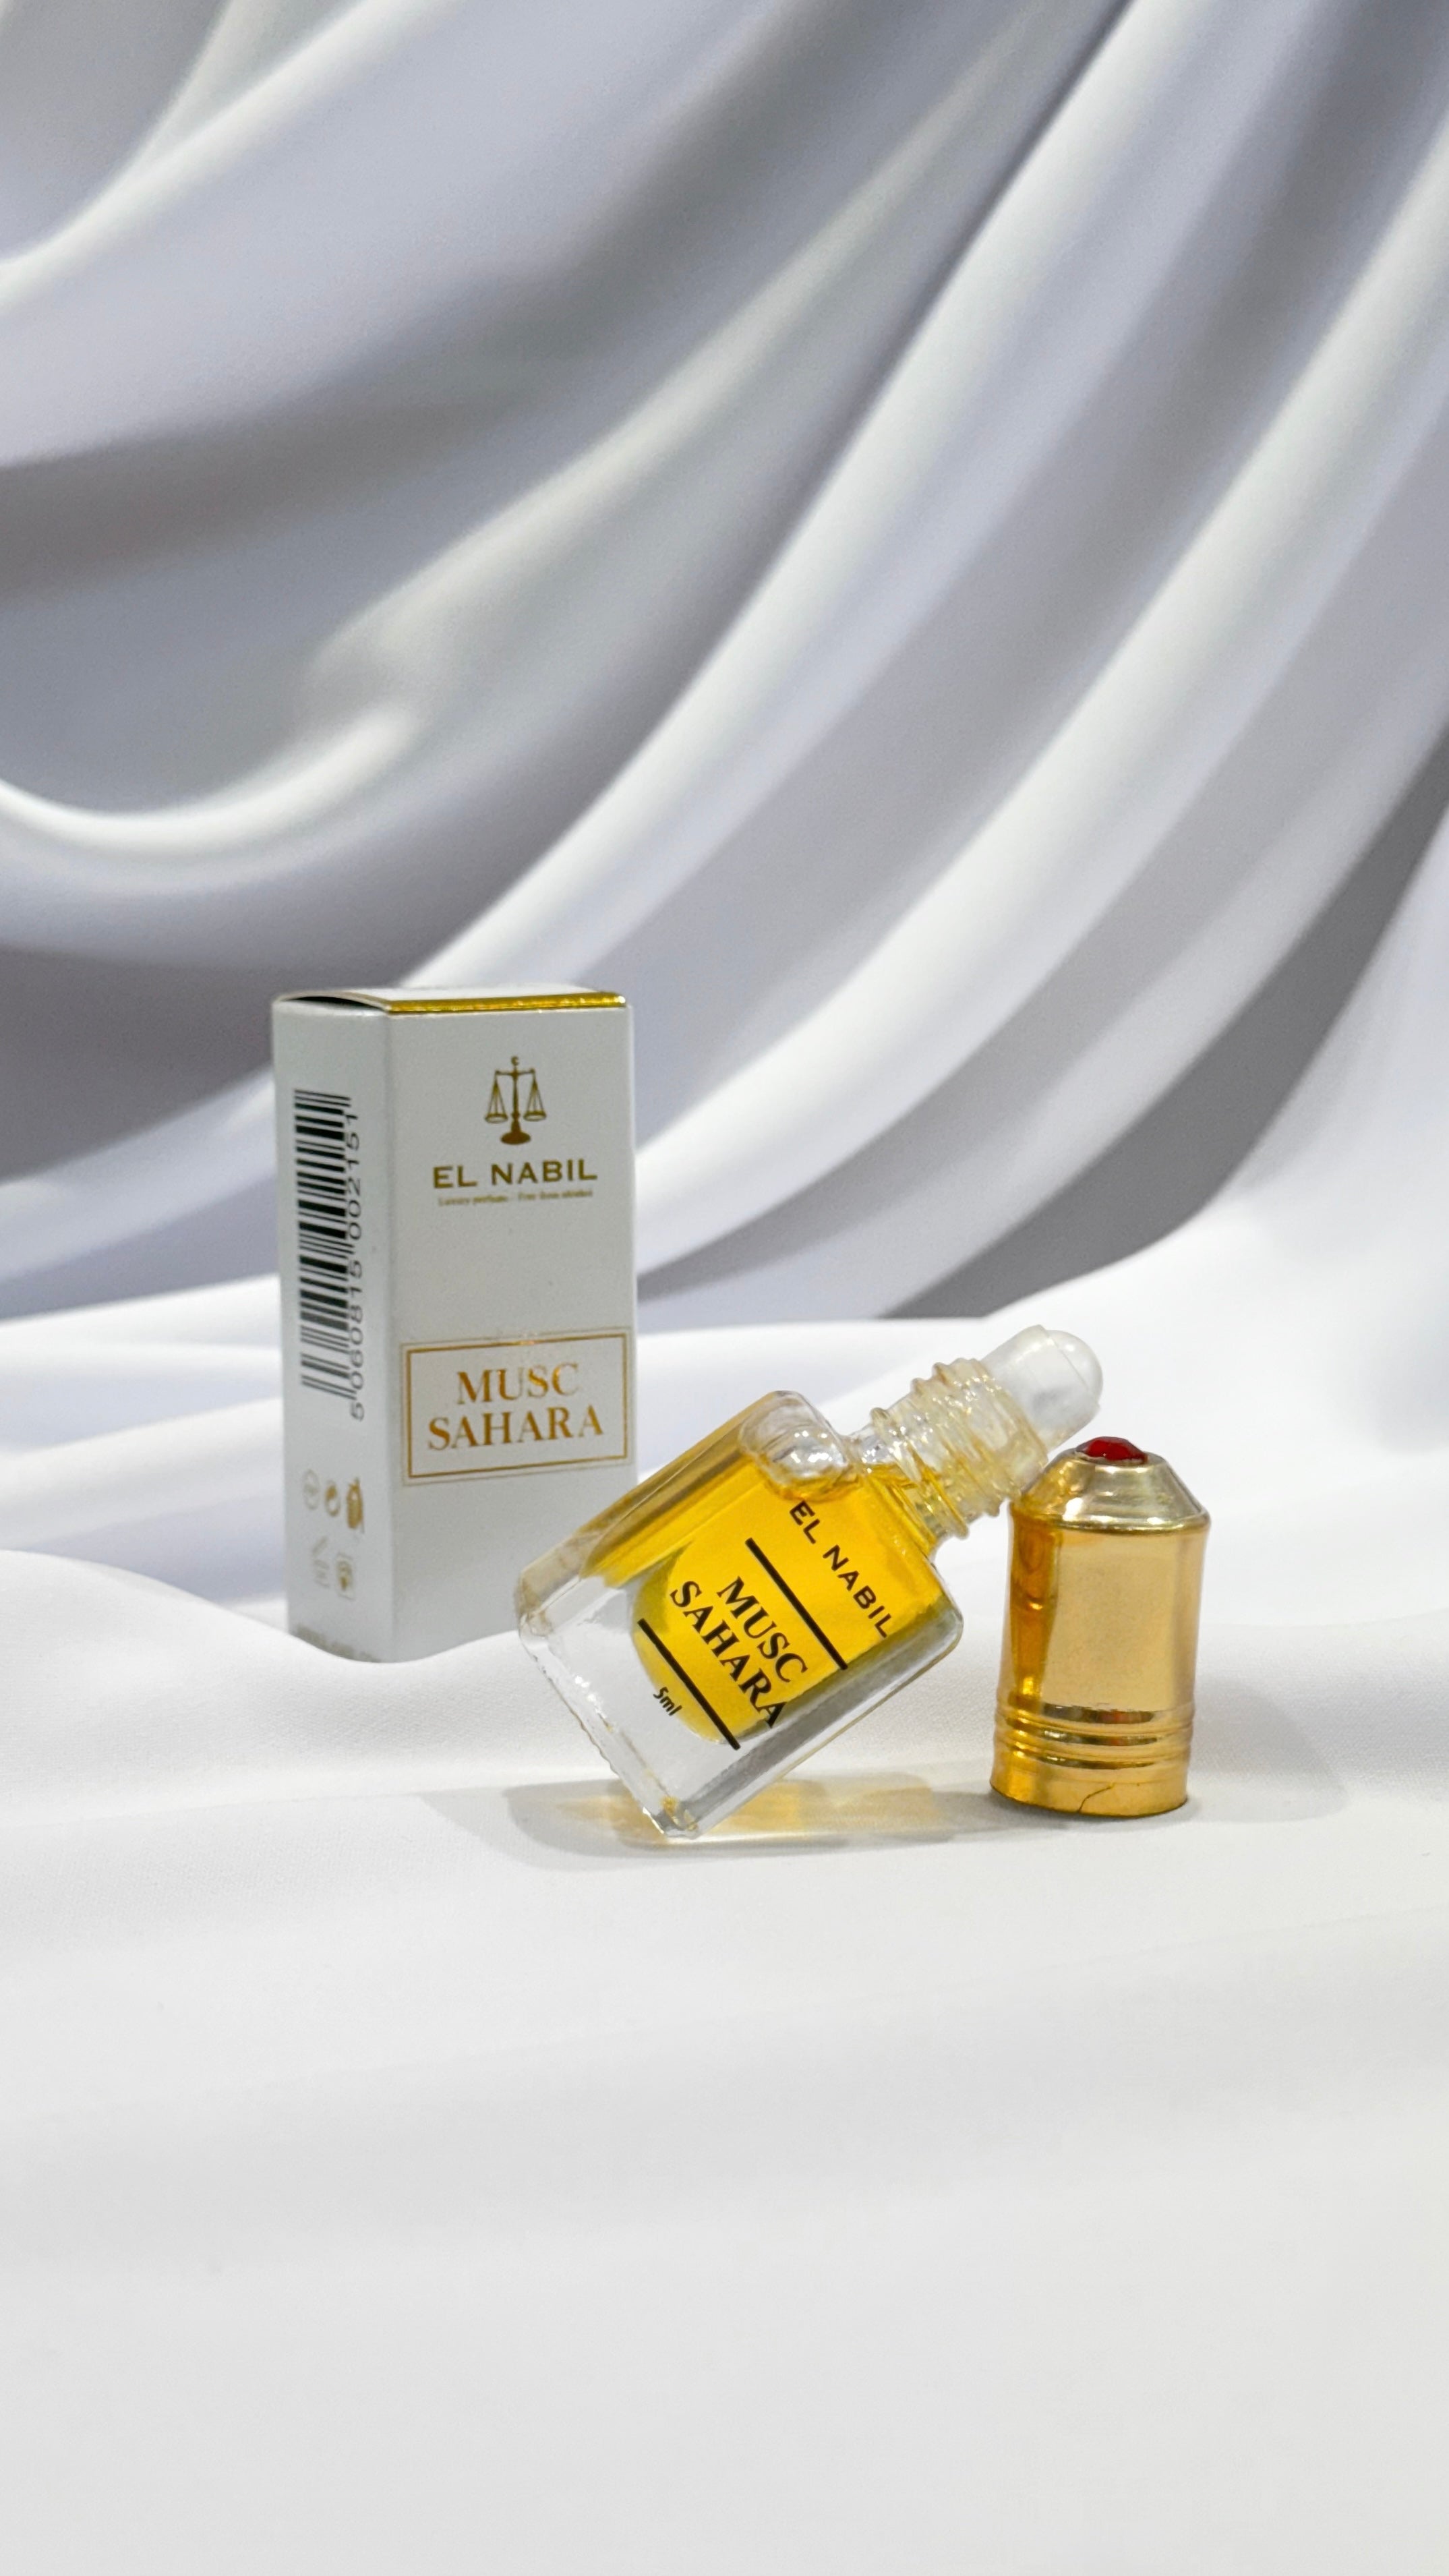 Extrait de parfum MUSC SAHARA